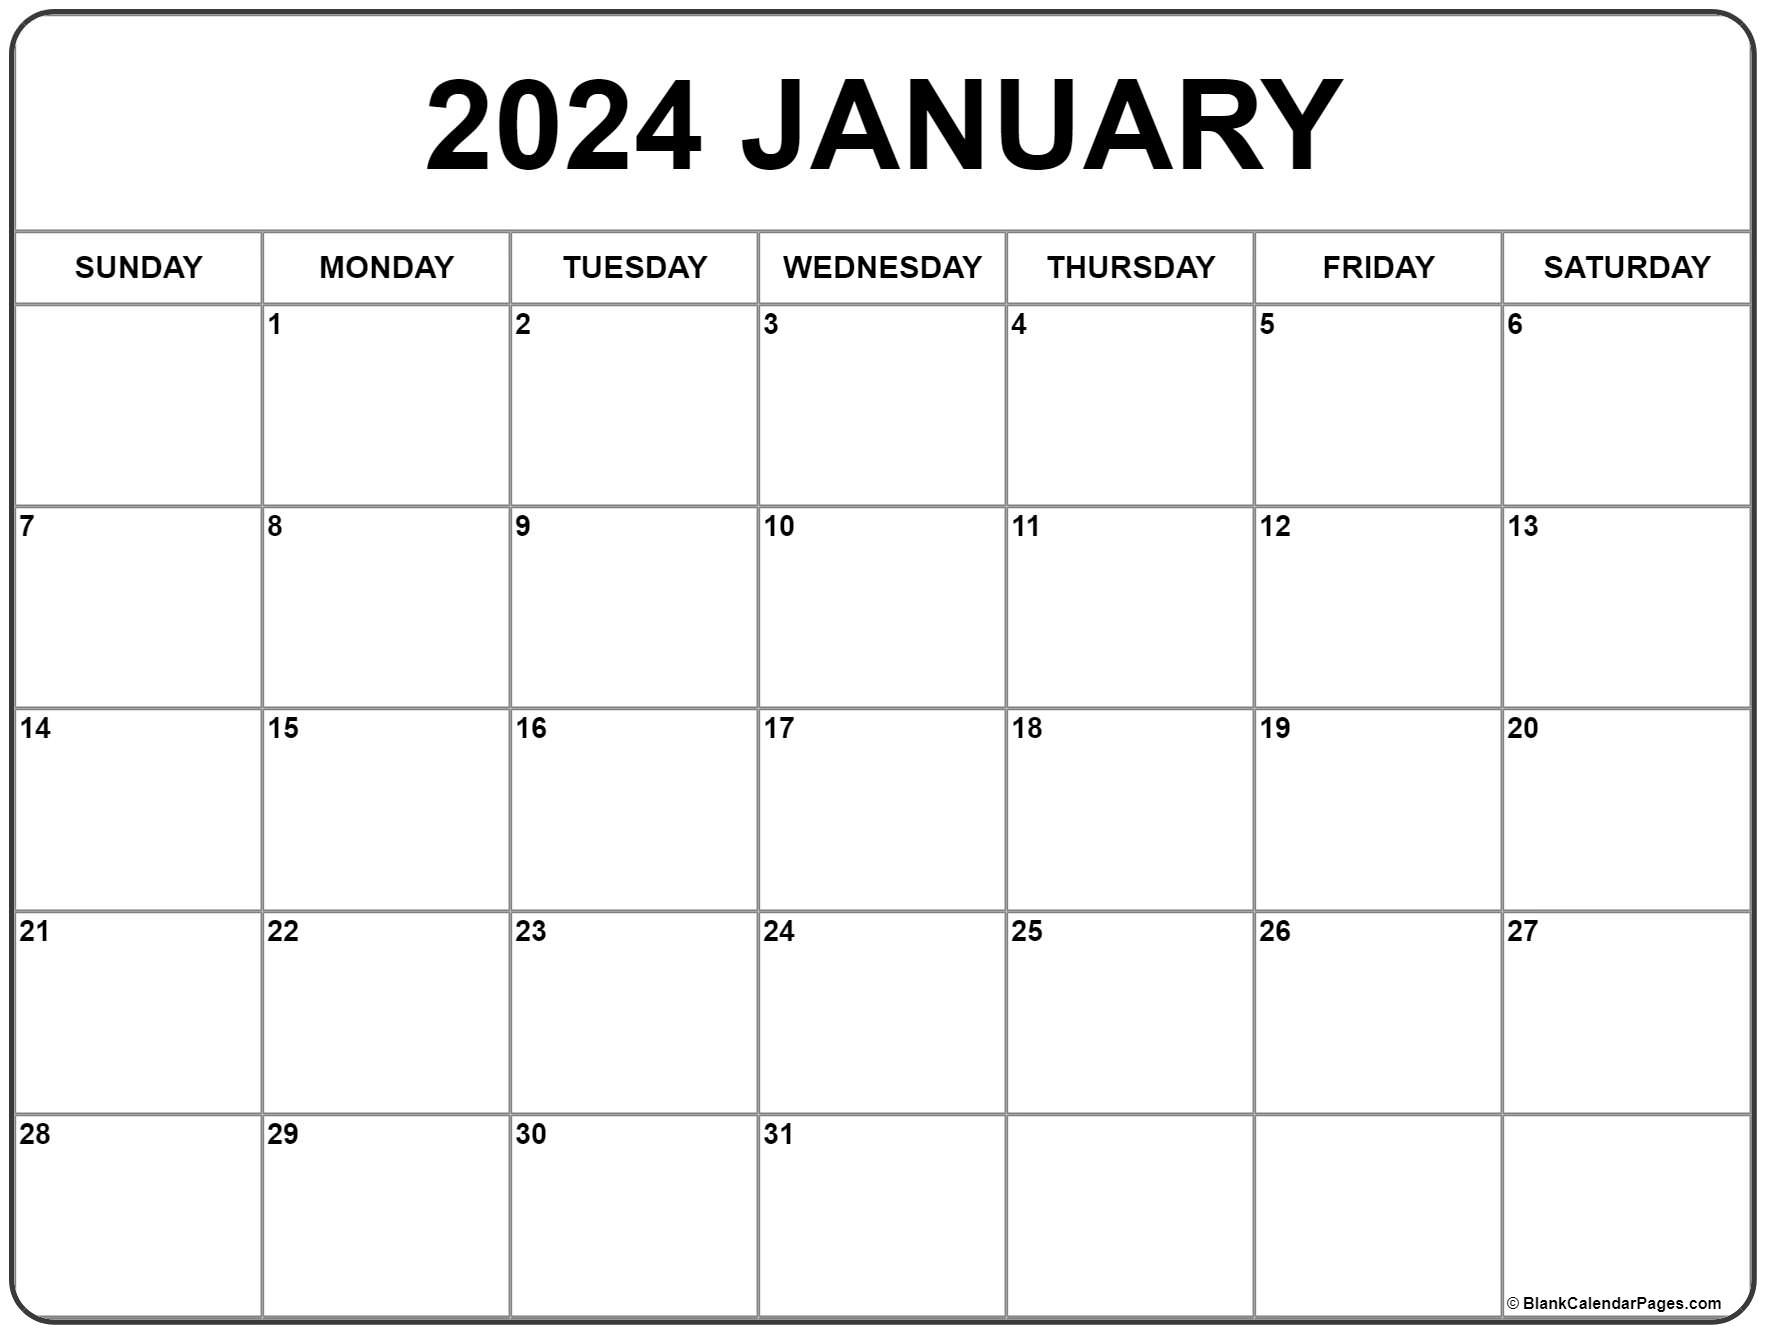 January 2024 Calendar | Free Printable Calendar for January Calendar Free Printable 2024